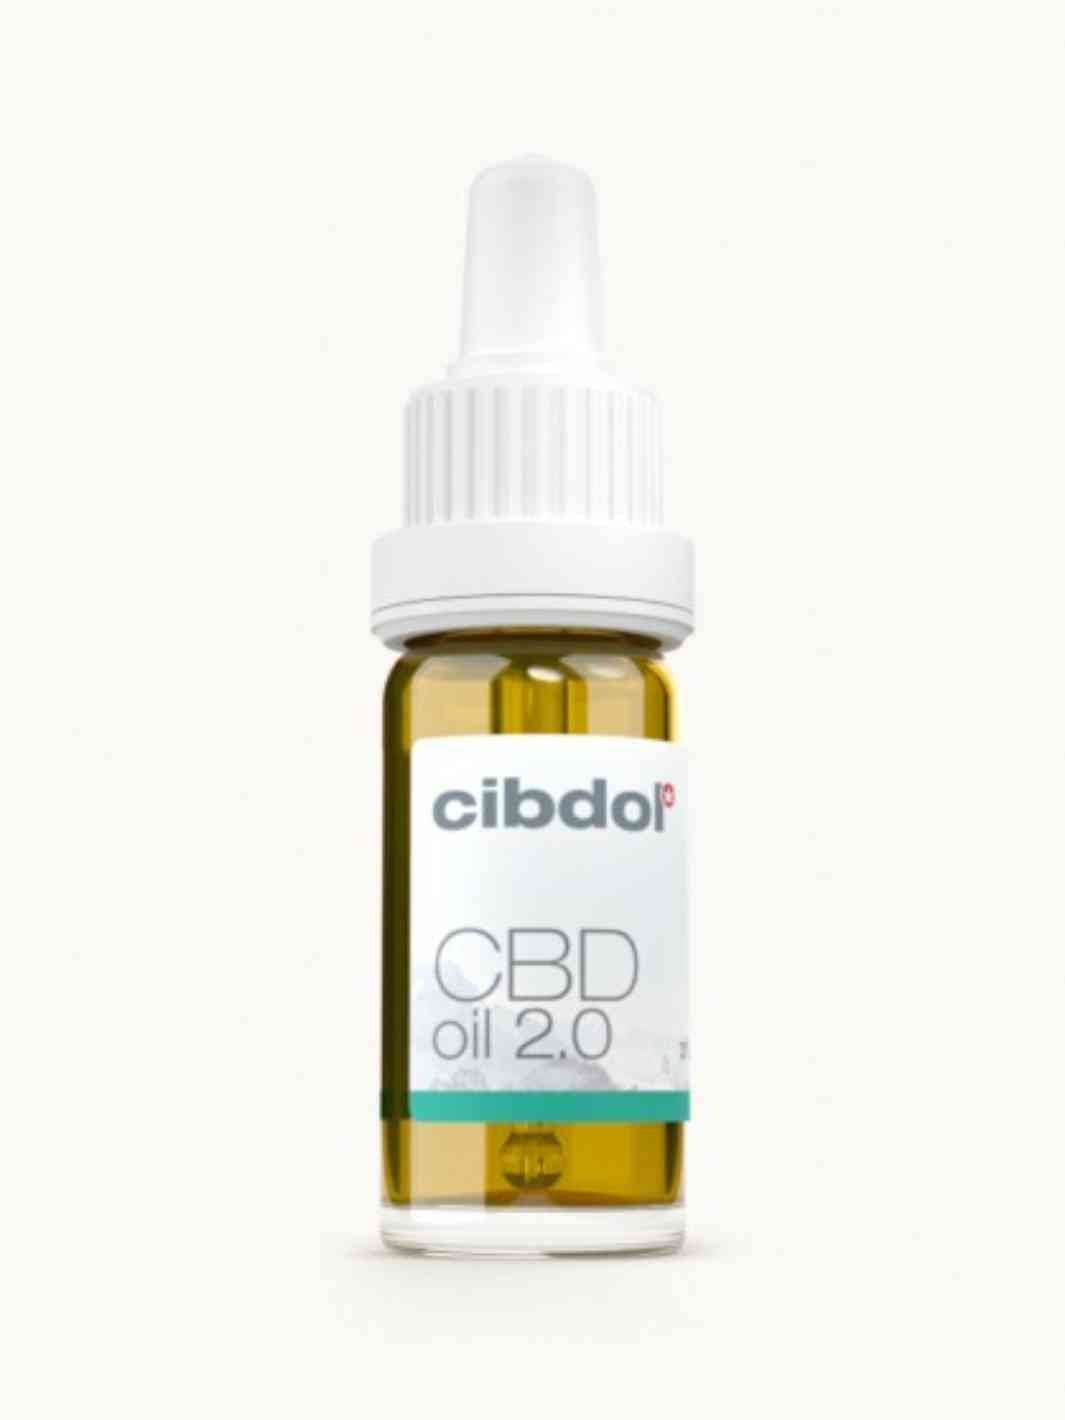 Huile CBD de marque Cibdol dosage fort